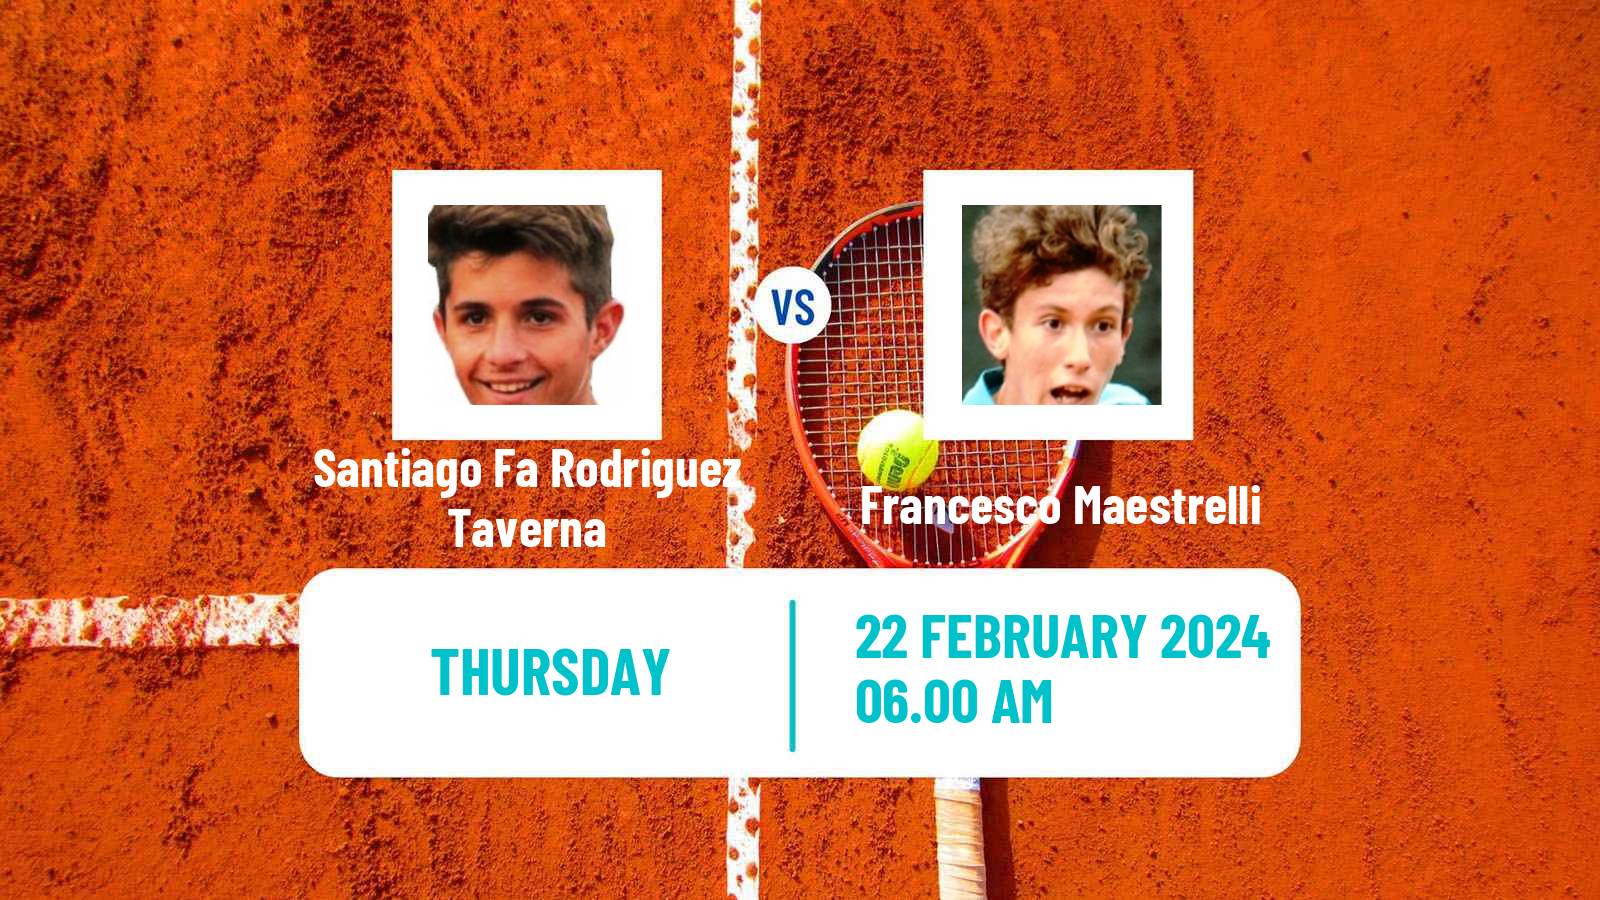 Tennis Tenerife 2 Challenger Men Santiago Fa Rodriguez Taverna - Francesco Maestrelli